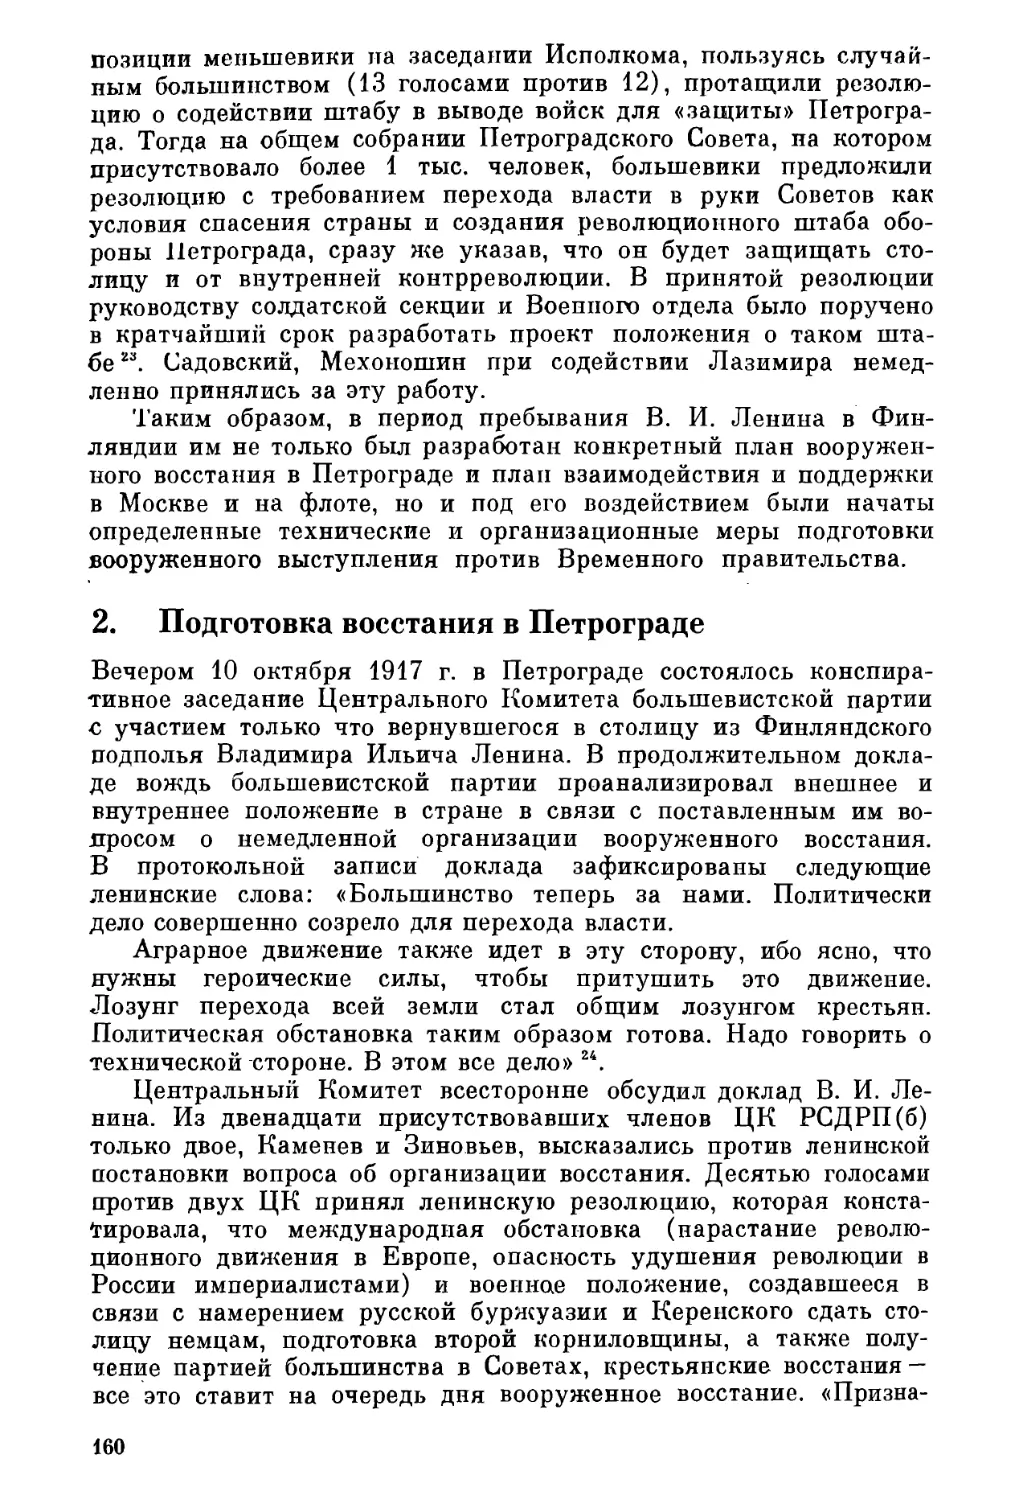 2. Подготовка восстания в Петрограде